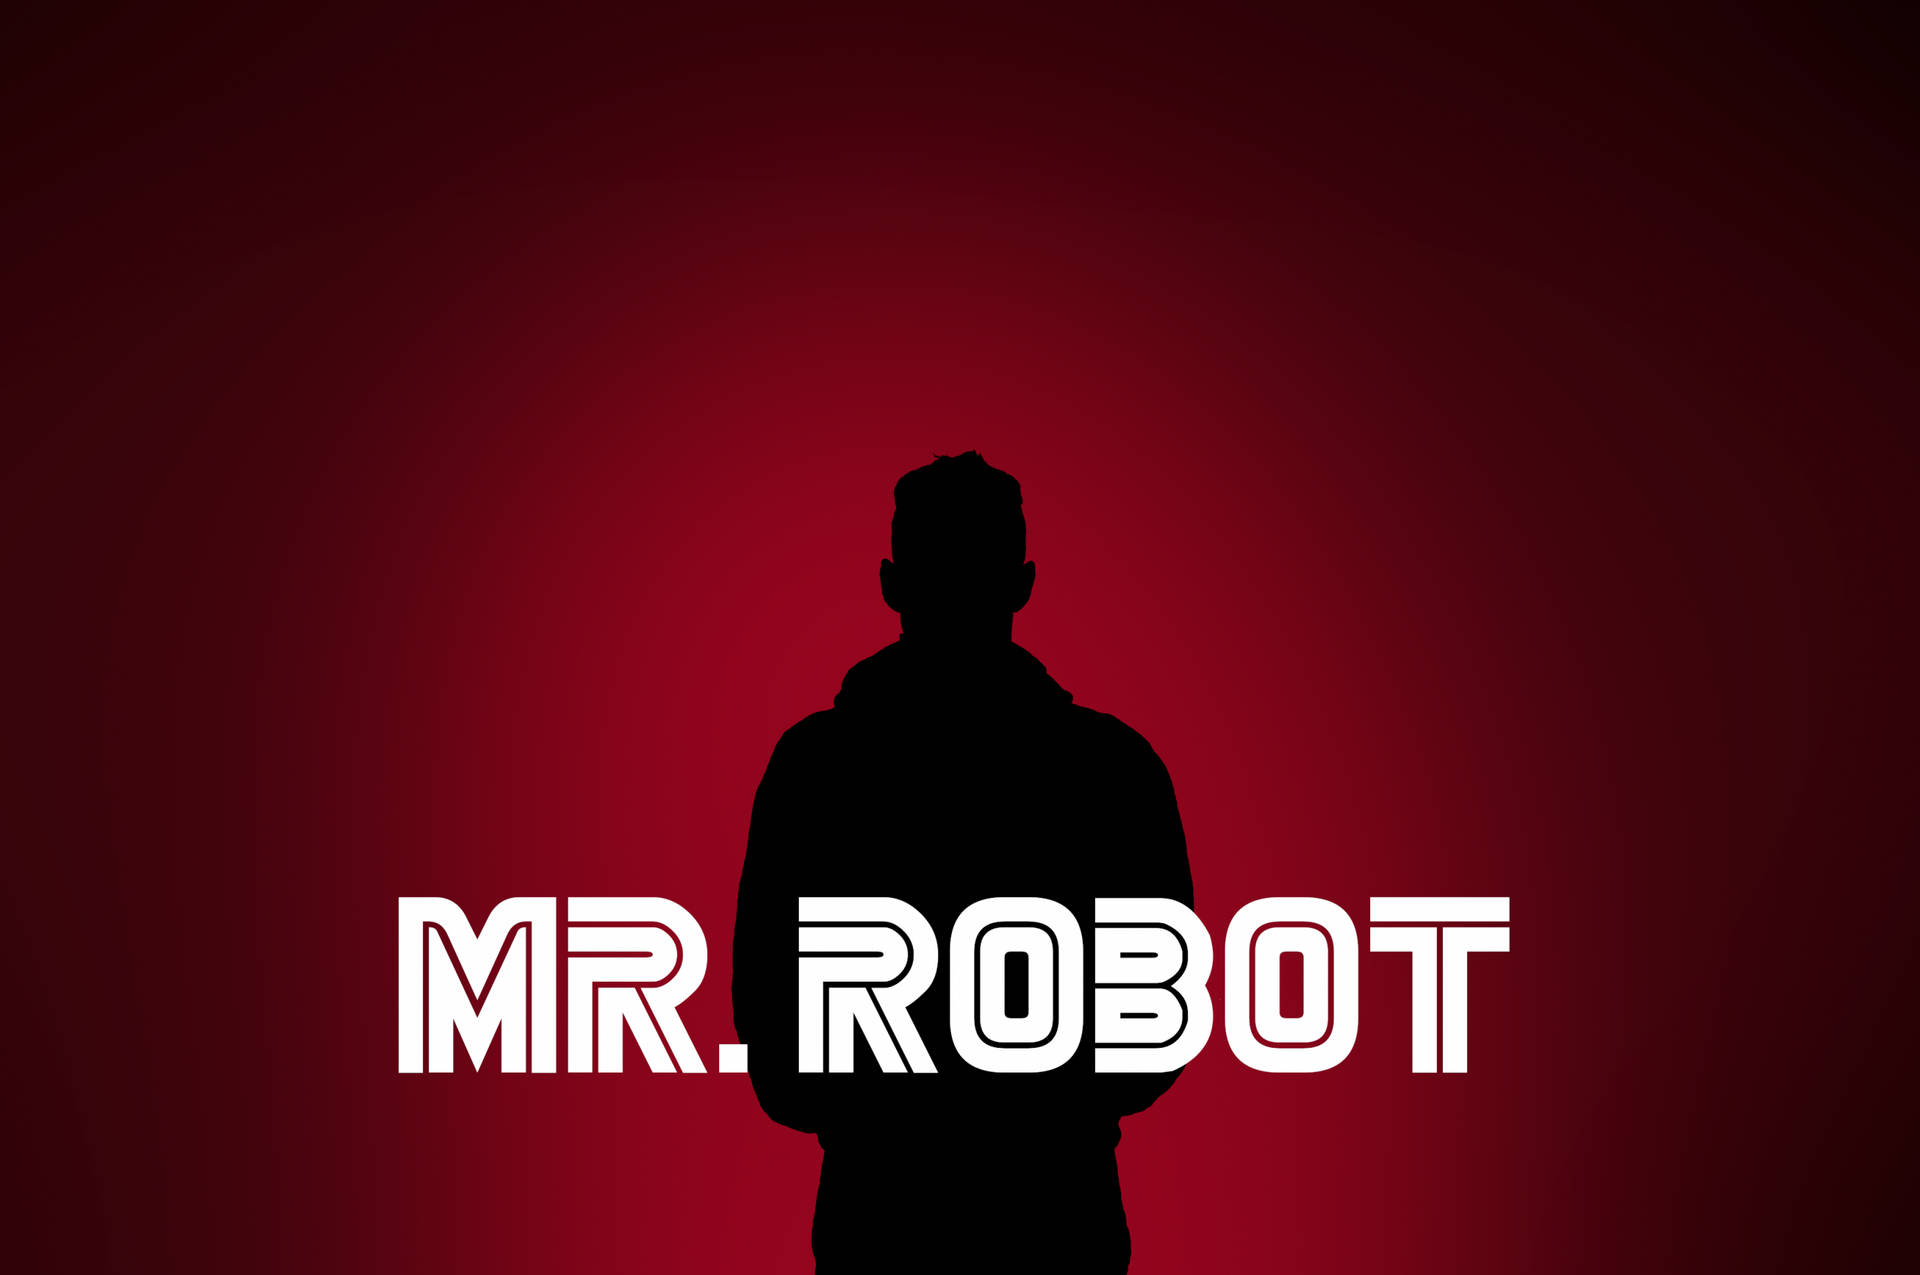 Hello Friend - Mr Robot on Behance | Mr robot, Robot wallpaper, Mr robot  quotes